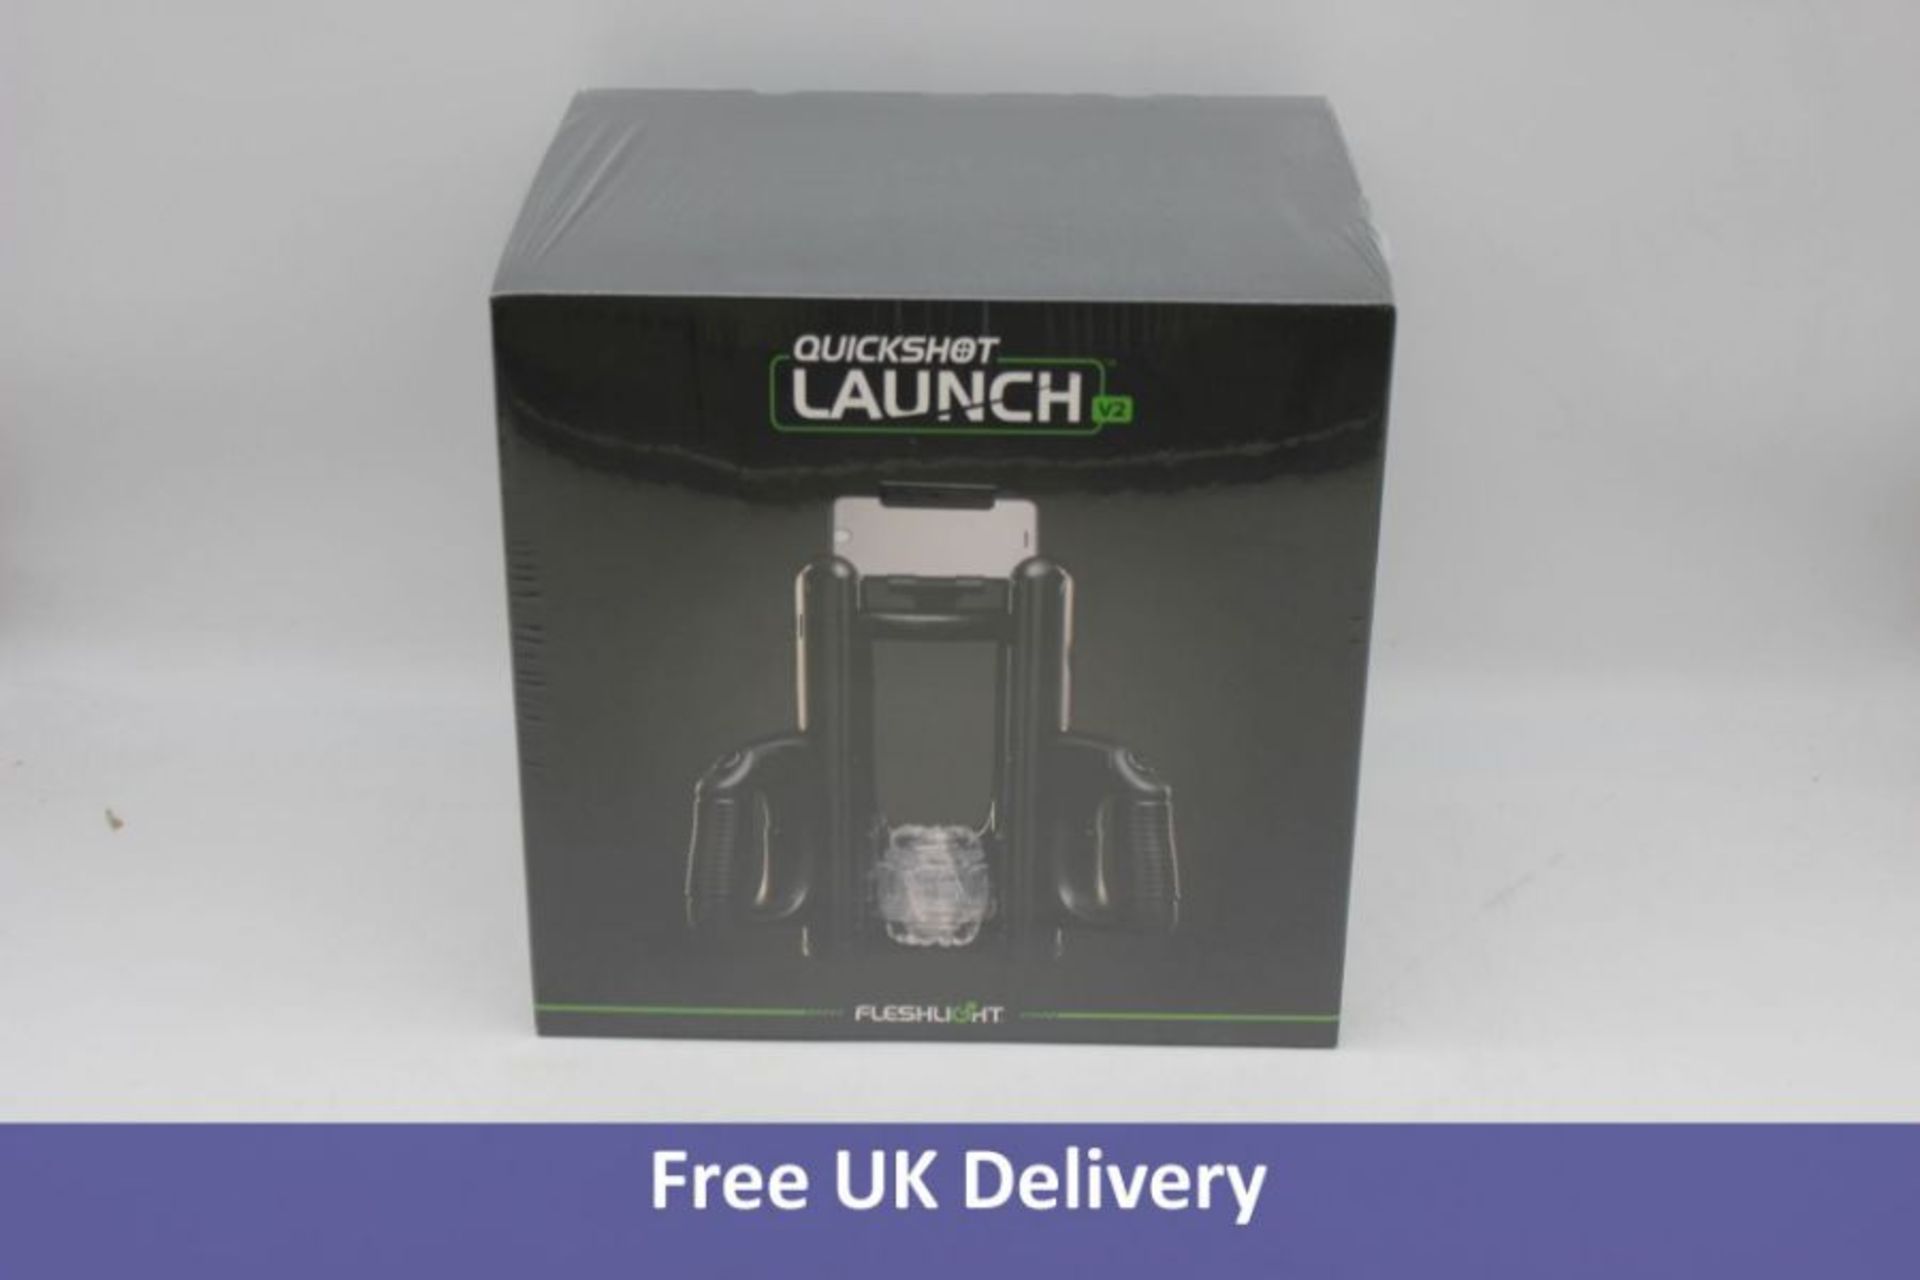 Fleshlight Quickshot Launch V2 and 1x Quickshot Vantage